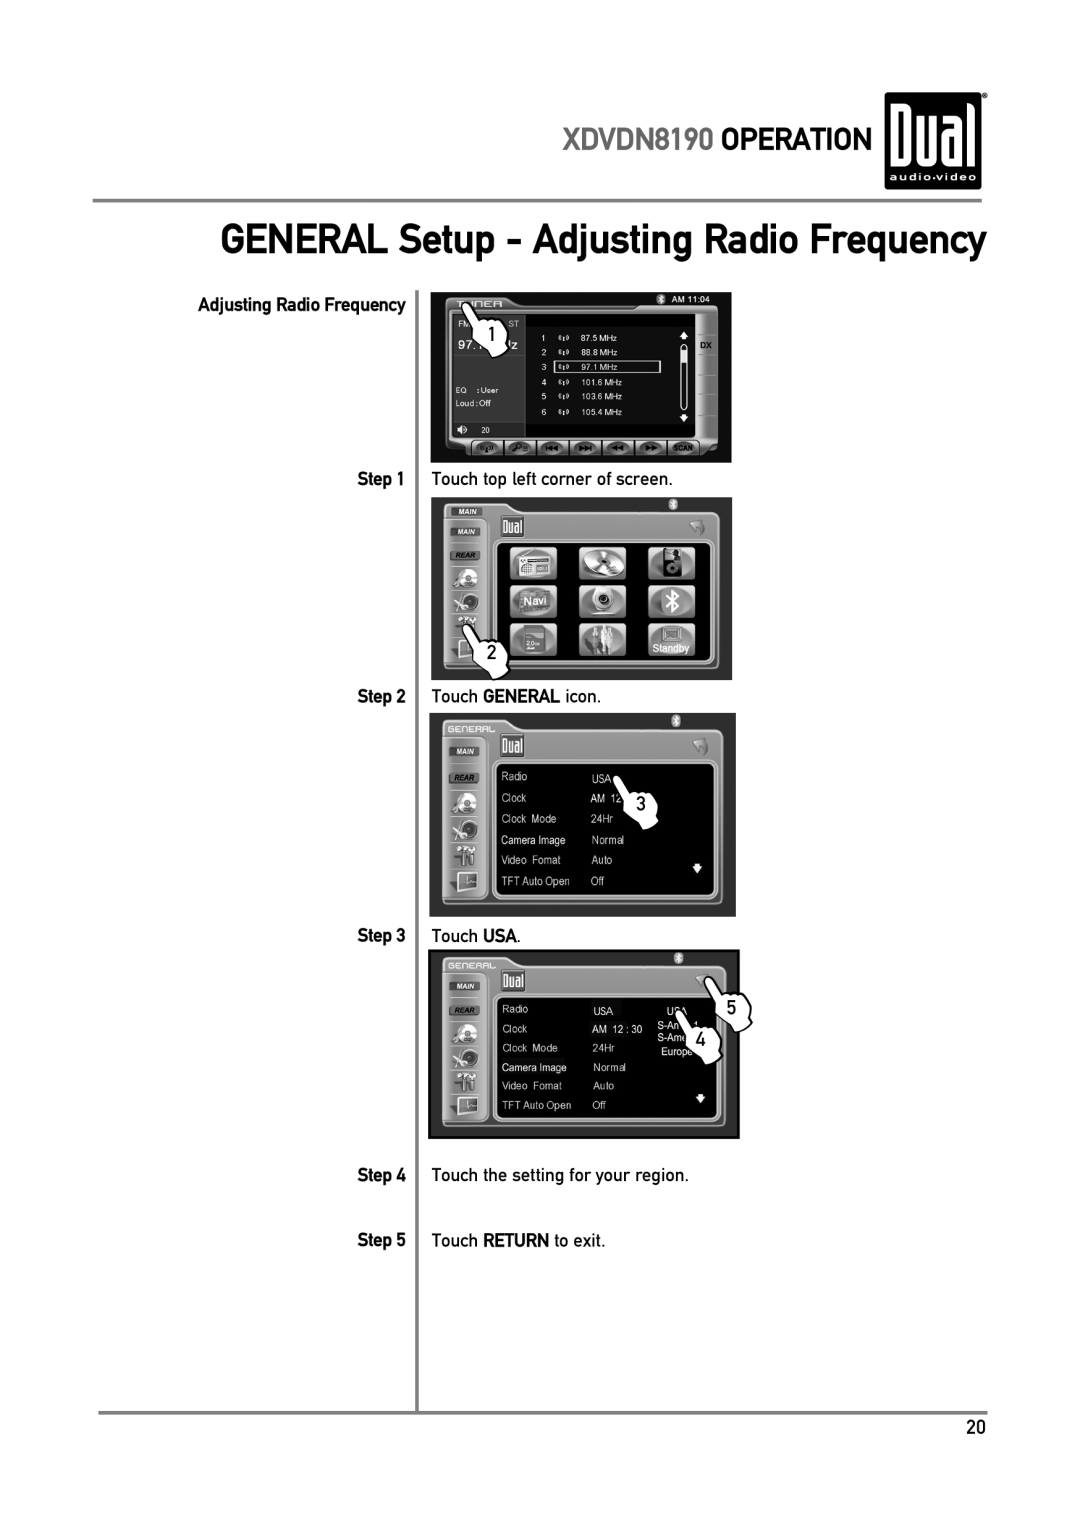 Dual owner manual L5 L4, GENERAL Setup - Adjusting Radio Frequency, XDVDN8190 OPERATION, Step Step Step 